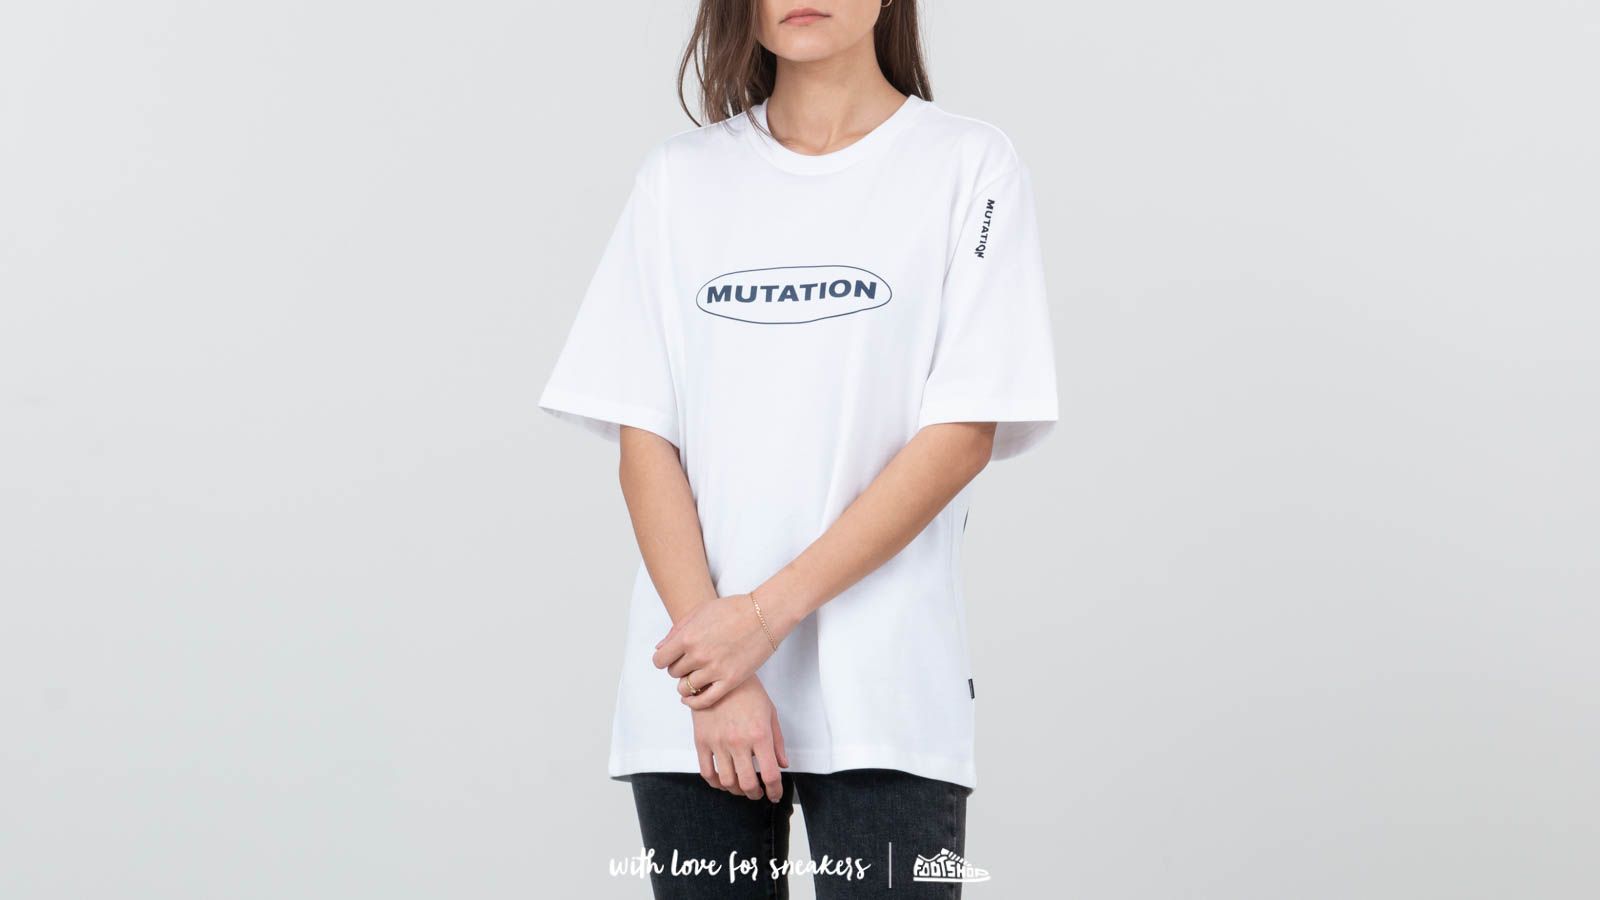 Camisetas Converse x Perks and Mini "Mutation" Graphic Tee White